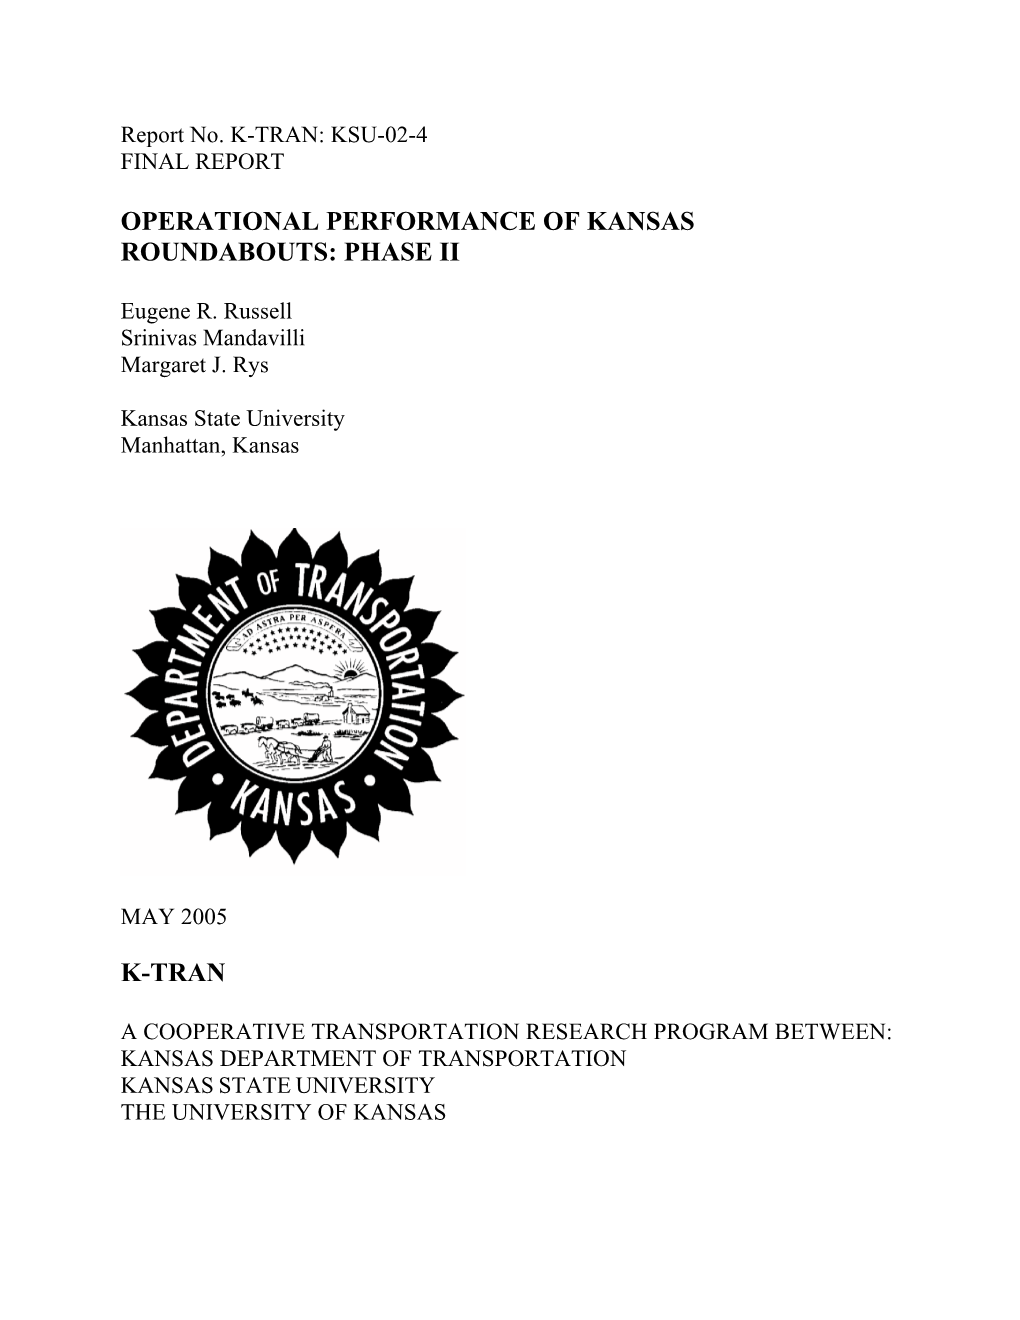 Operational Performance of Kansas Roundabouts: Phase Ii